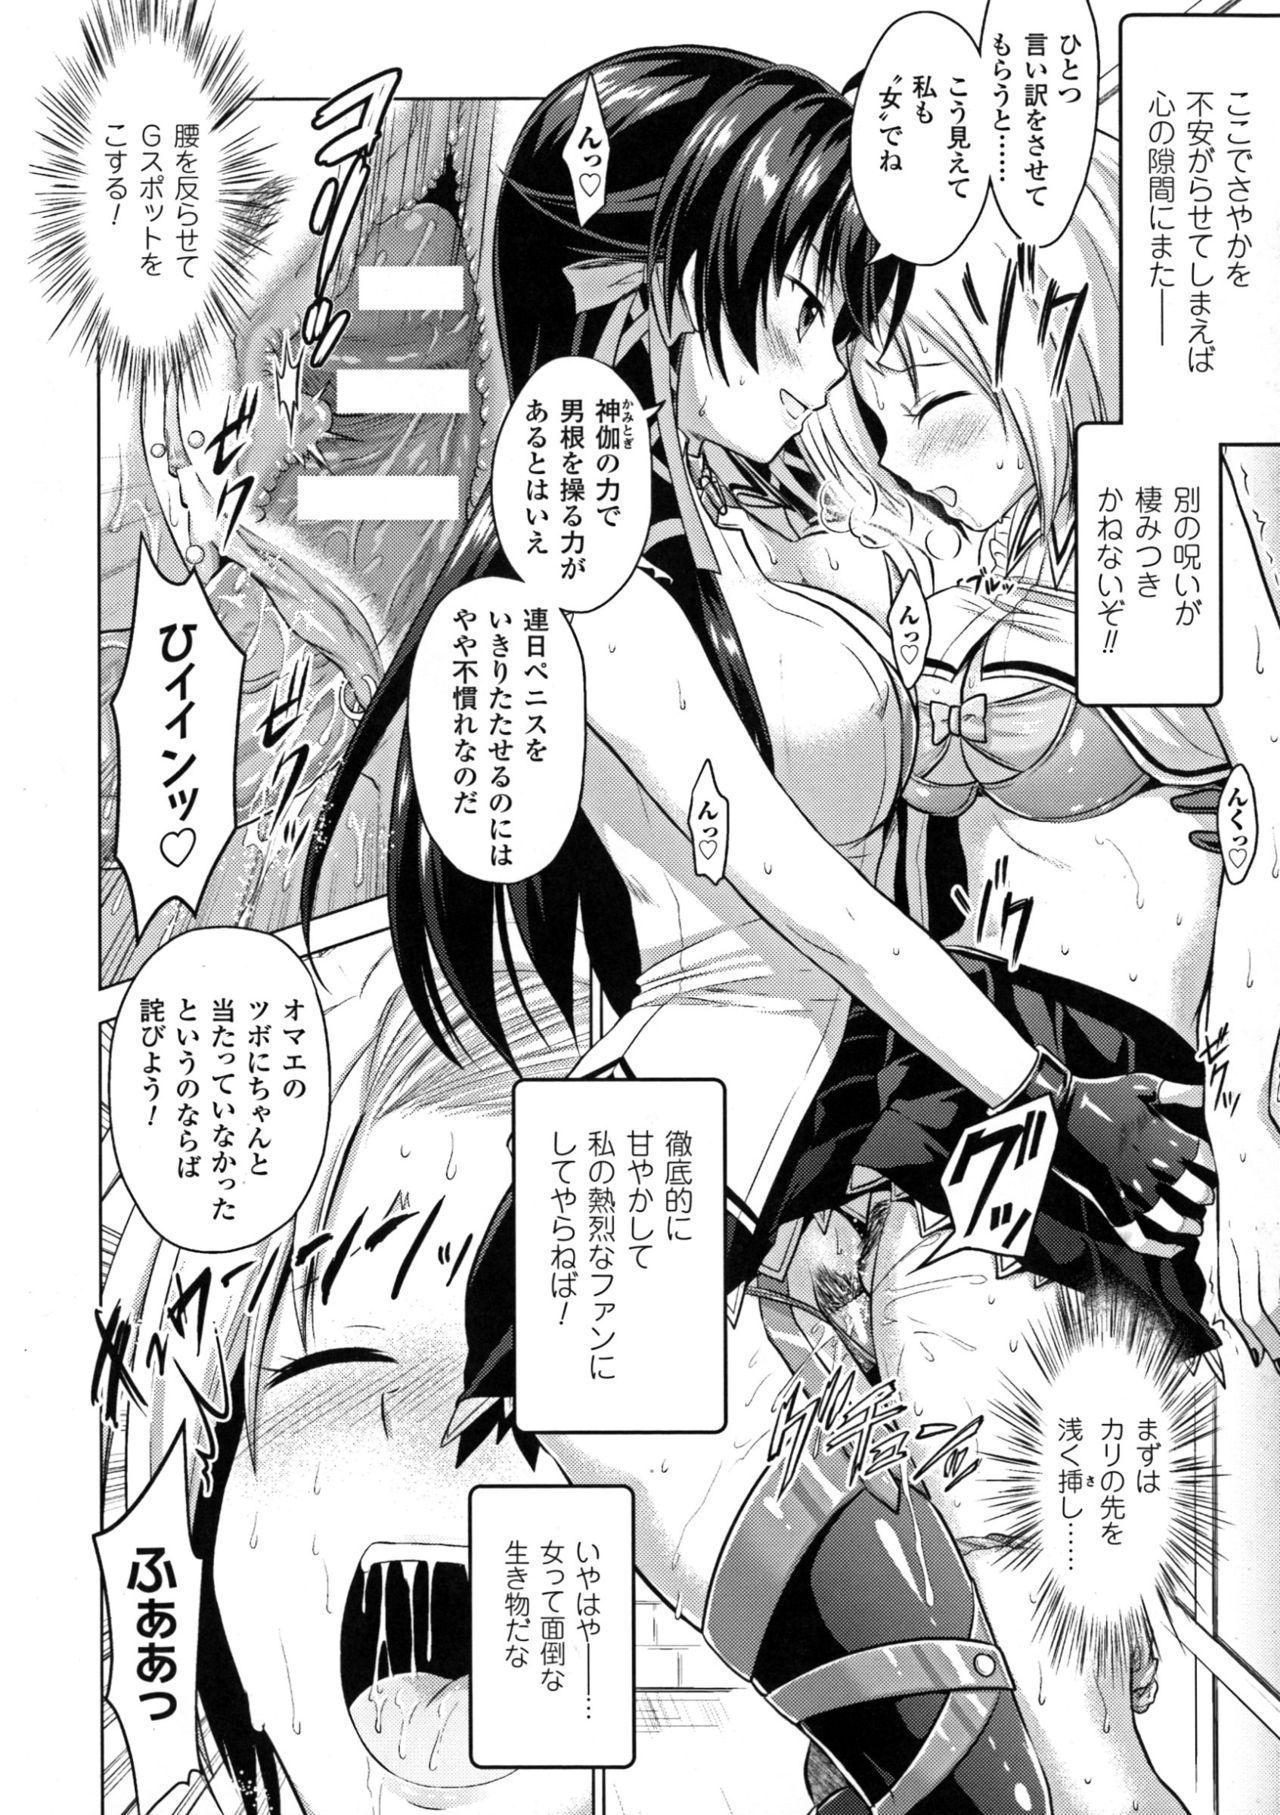 Seigi no Heroine Kangoku File DX vol. 6 27